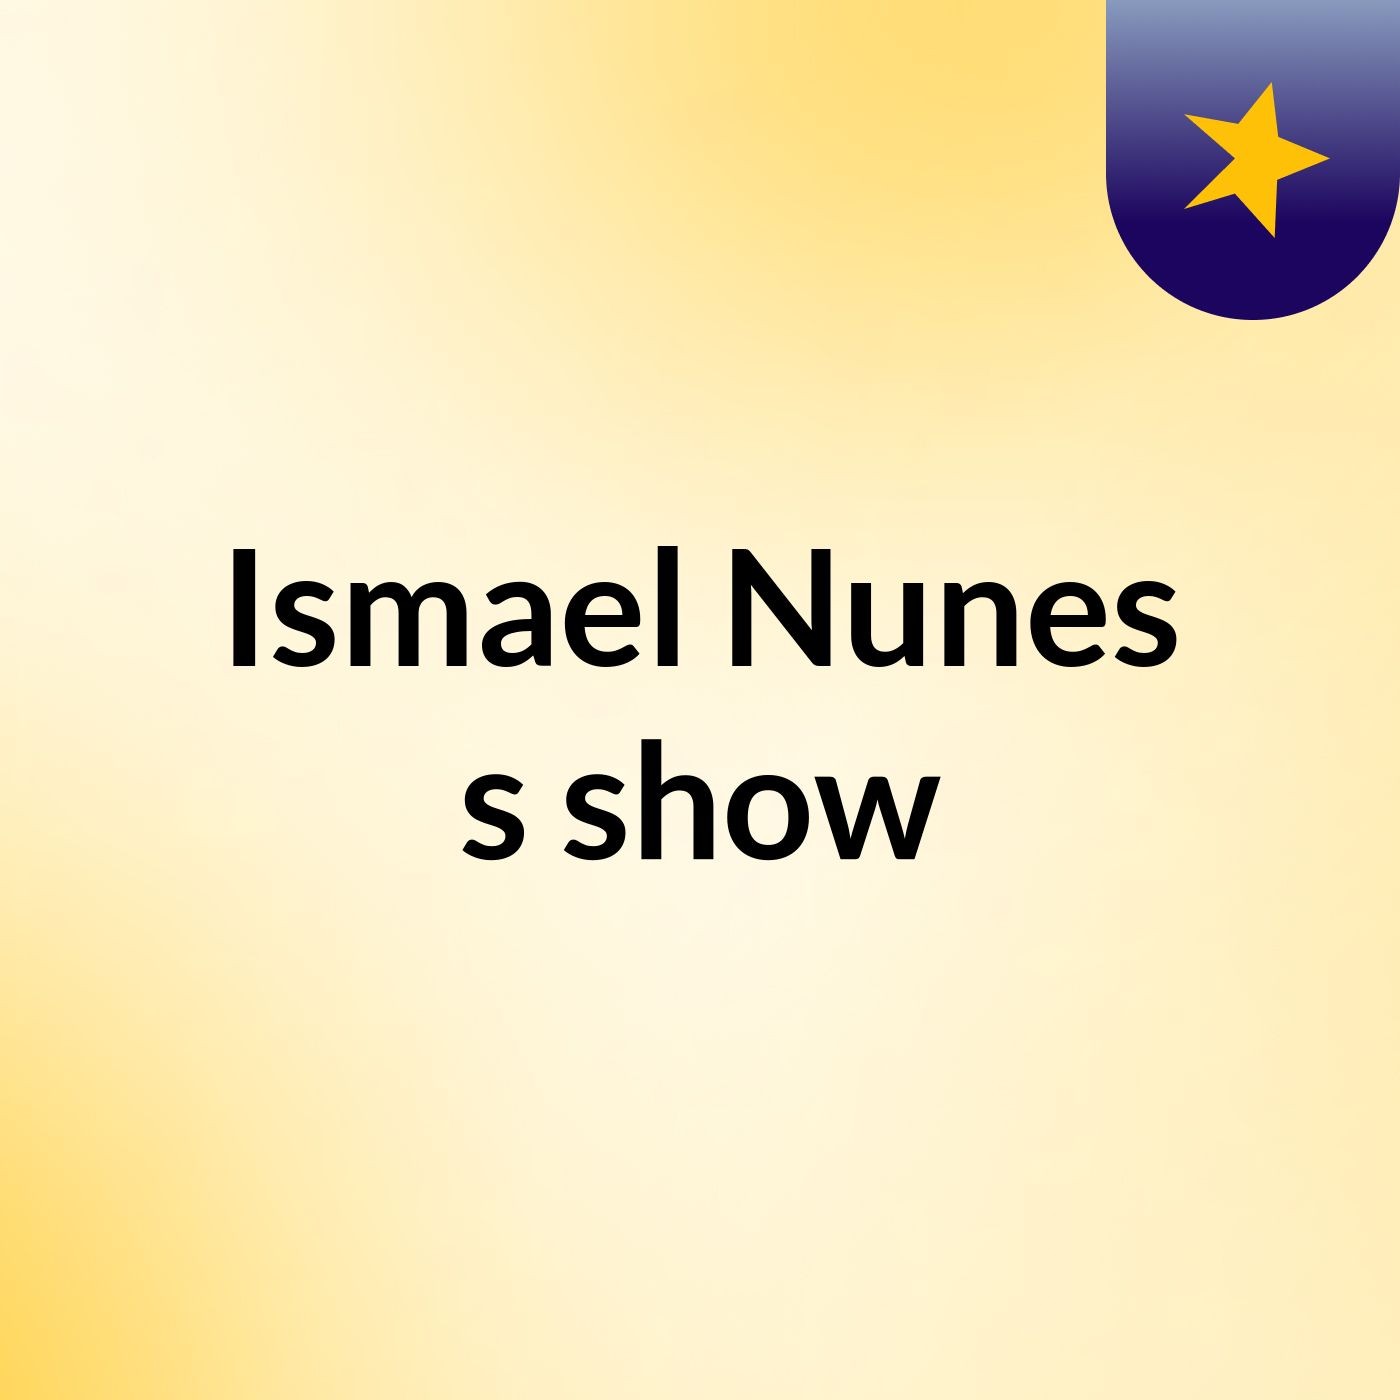 Ismael Nunes's show